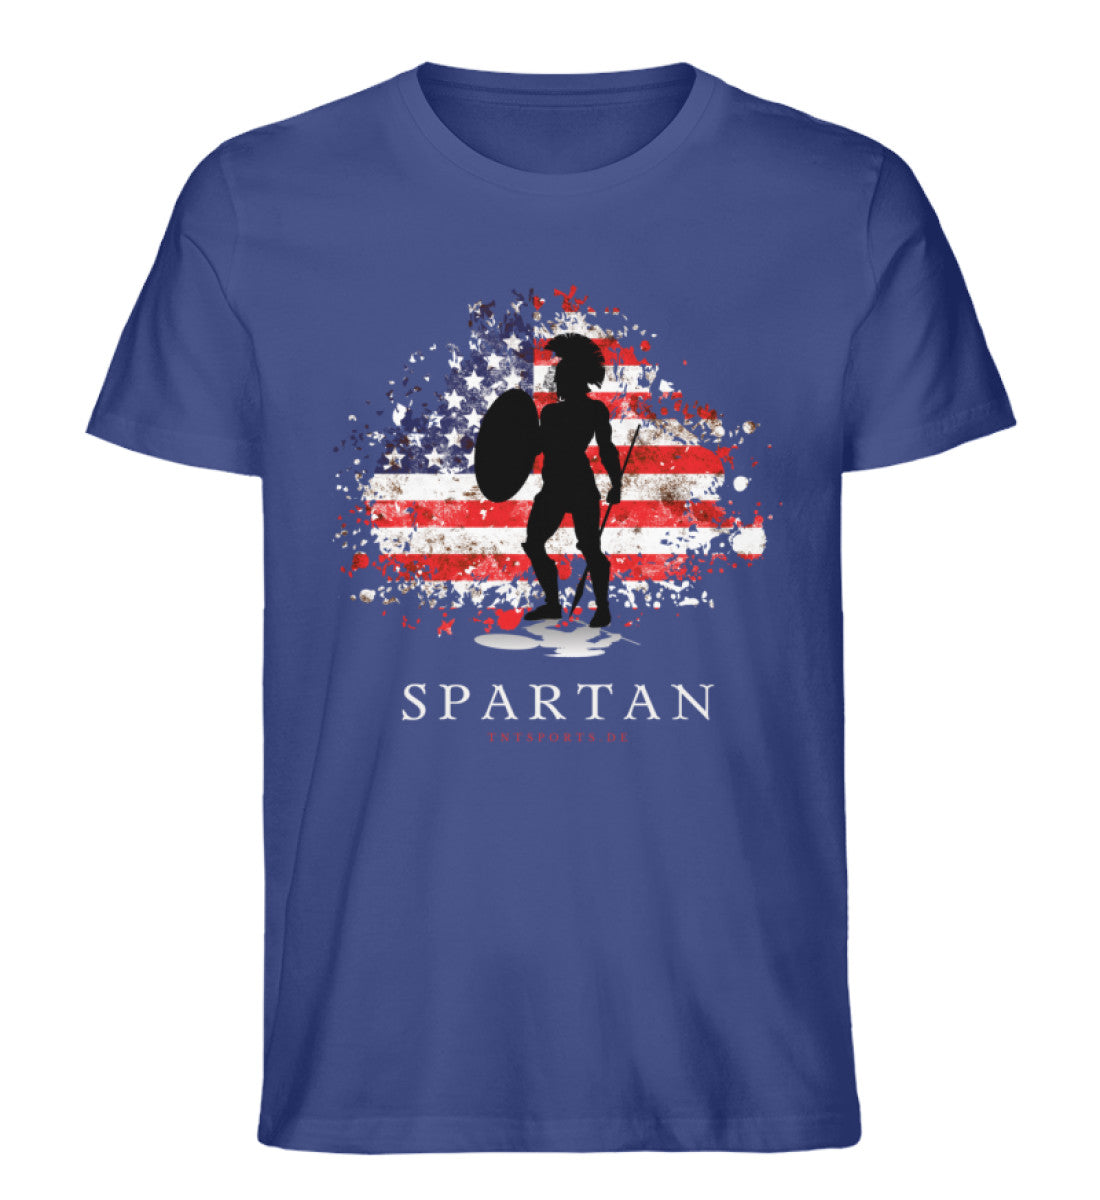 Organic Premium Unisex T-Shirt "USA SPARTAN" Worker Blue